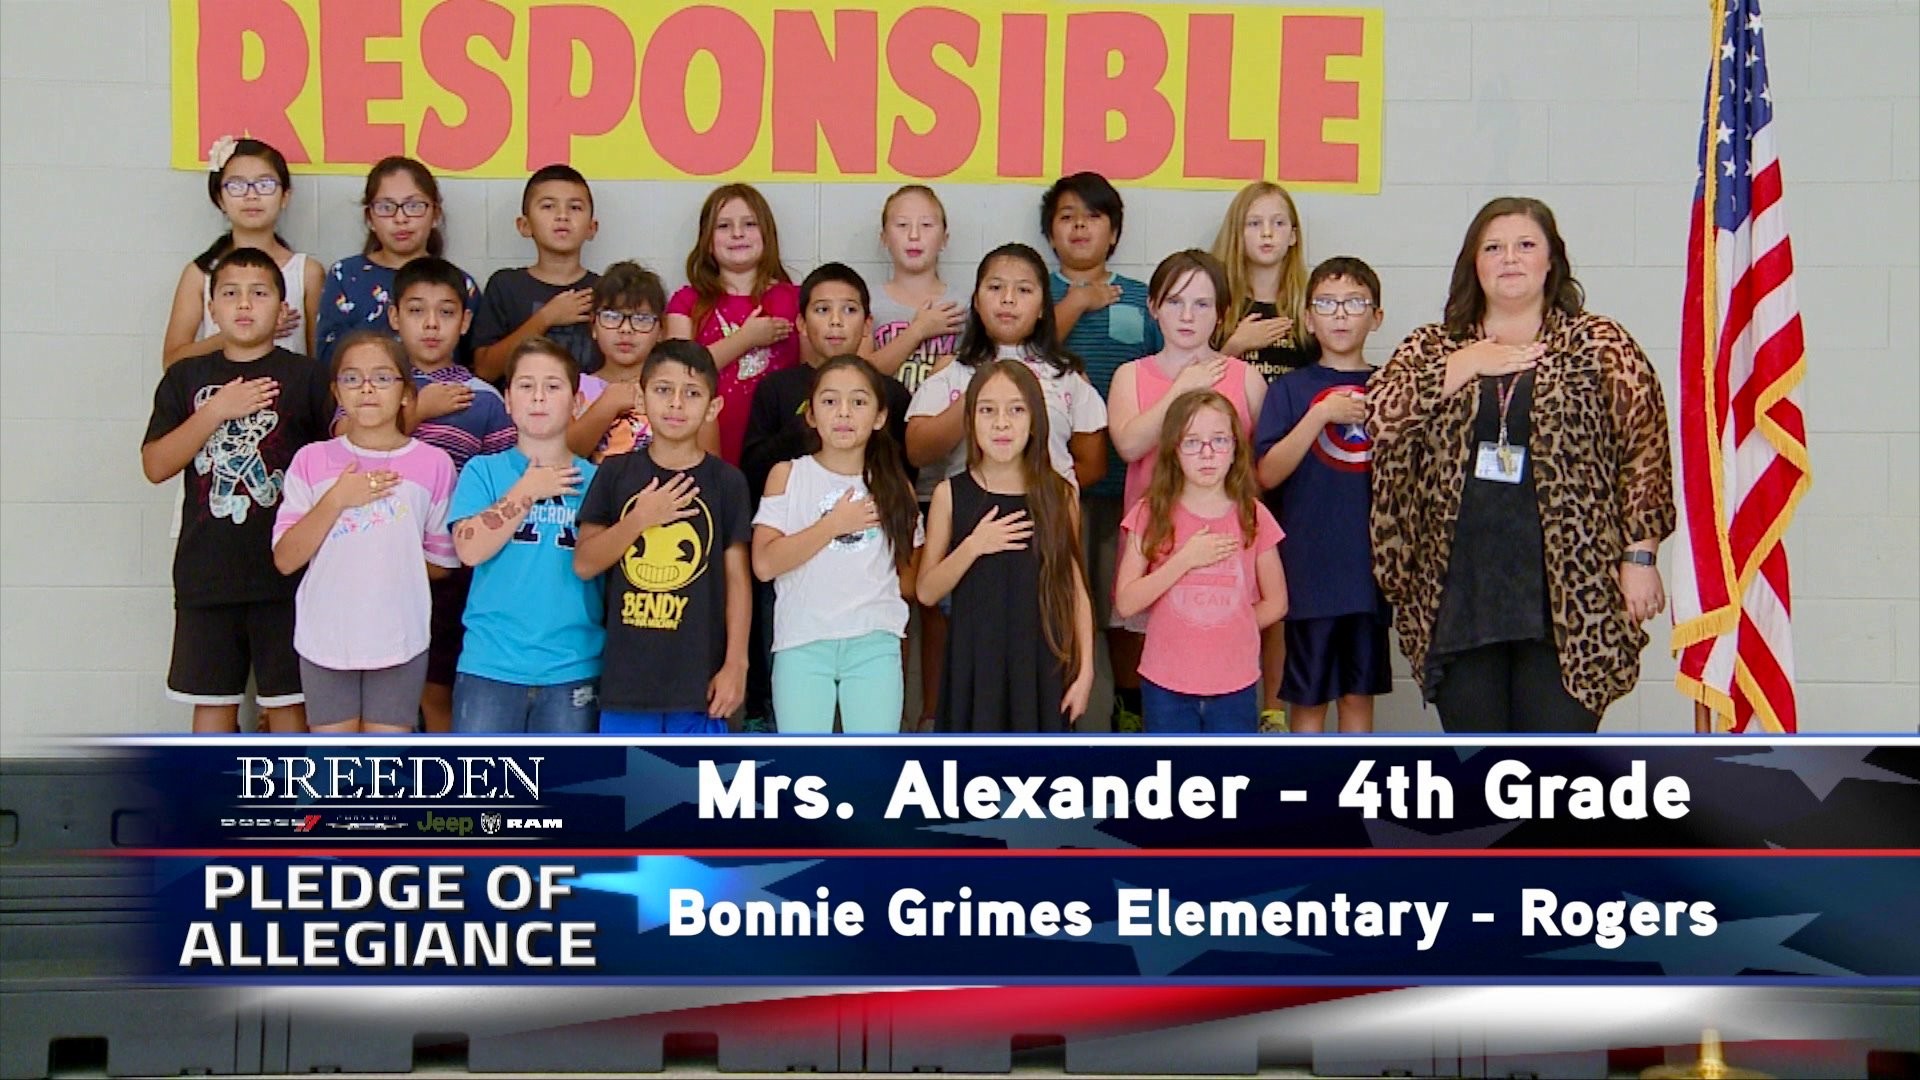 Mrs. Alexander  4th Grade Bonnie Grimes Elementary, Rogers